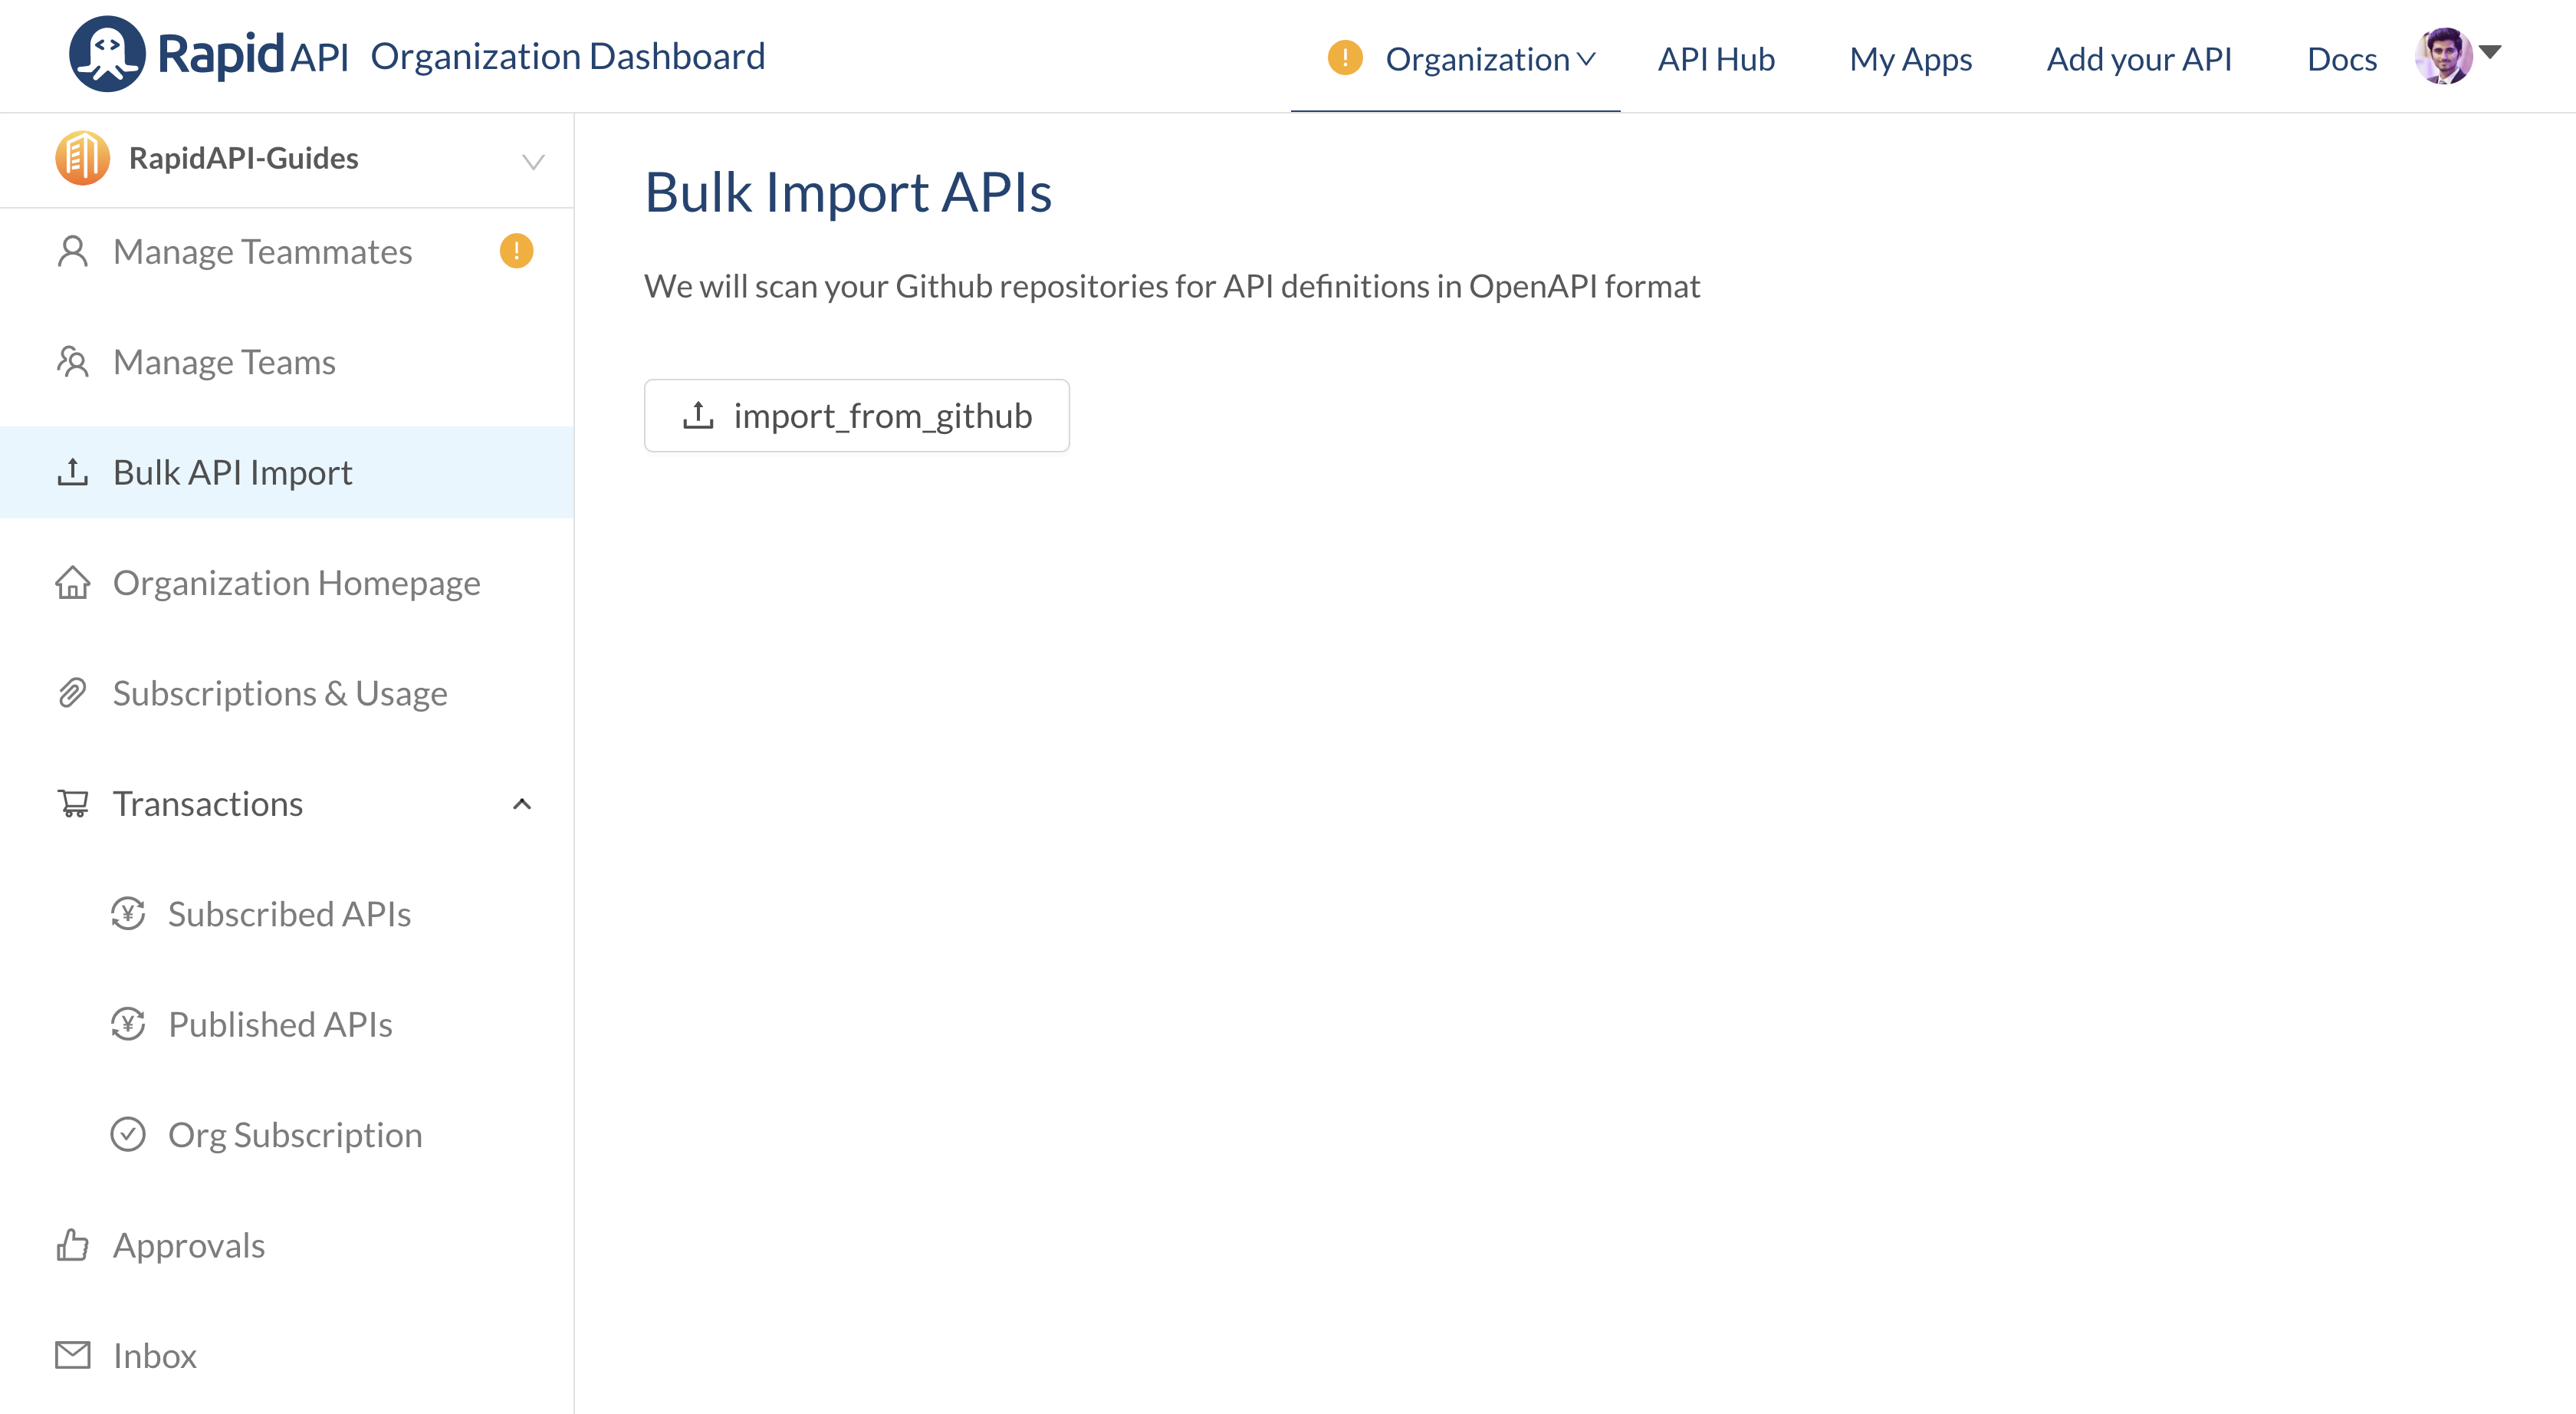 Bulk Import APIs